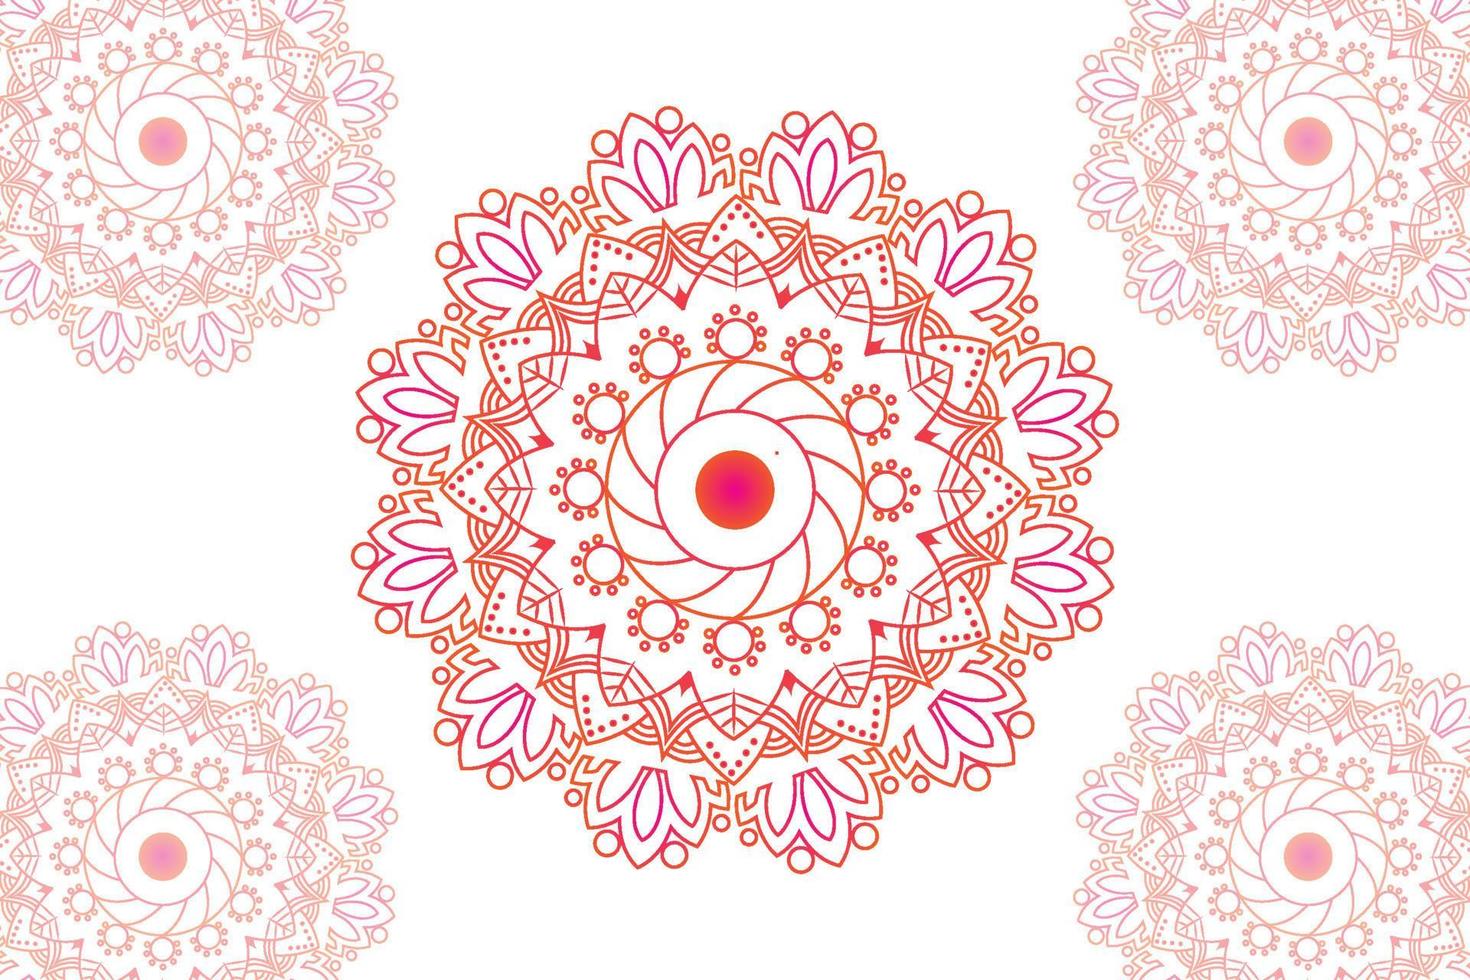 enkel mandala nyans sida. prydnad runda mandala. geometrisk cirkel element. kalejdoskop, medaljong, yoga, Indien, arabiska. abstrakt design mall vektor